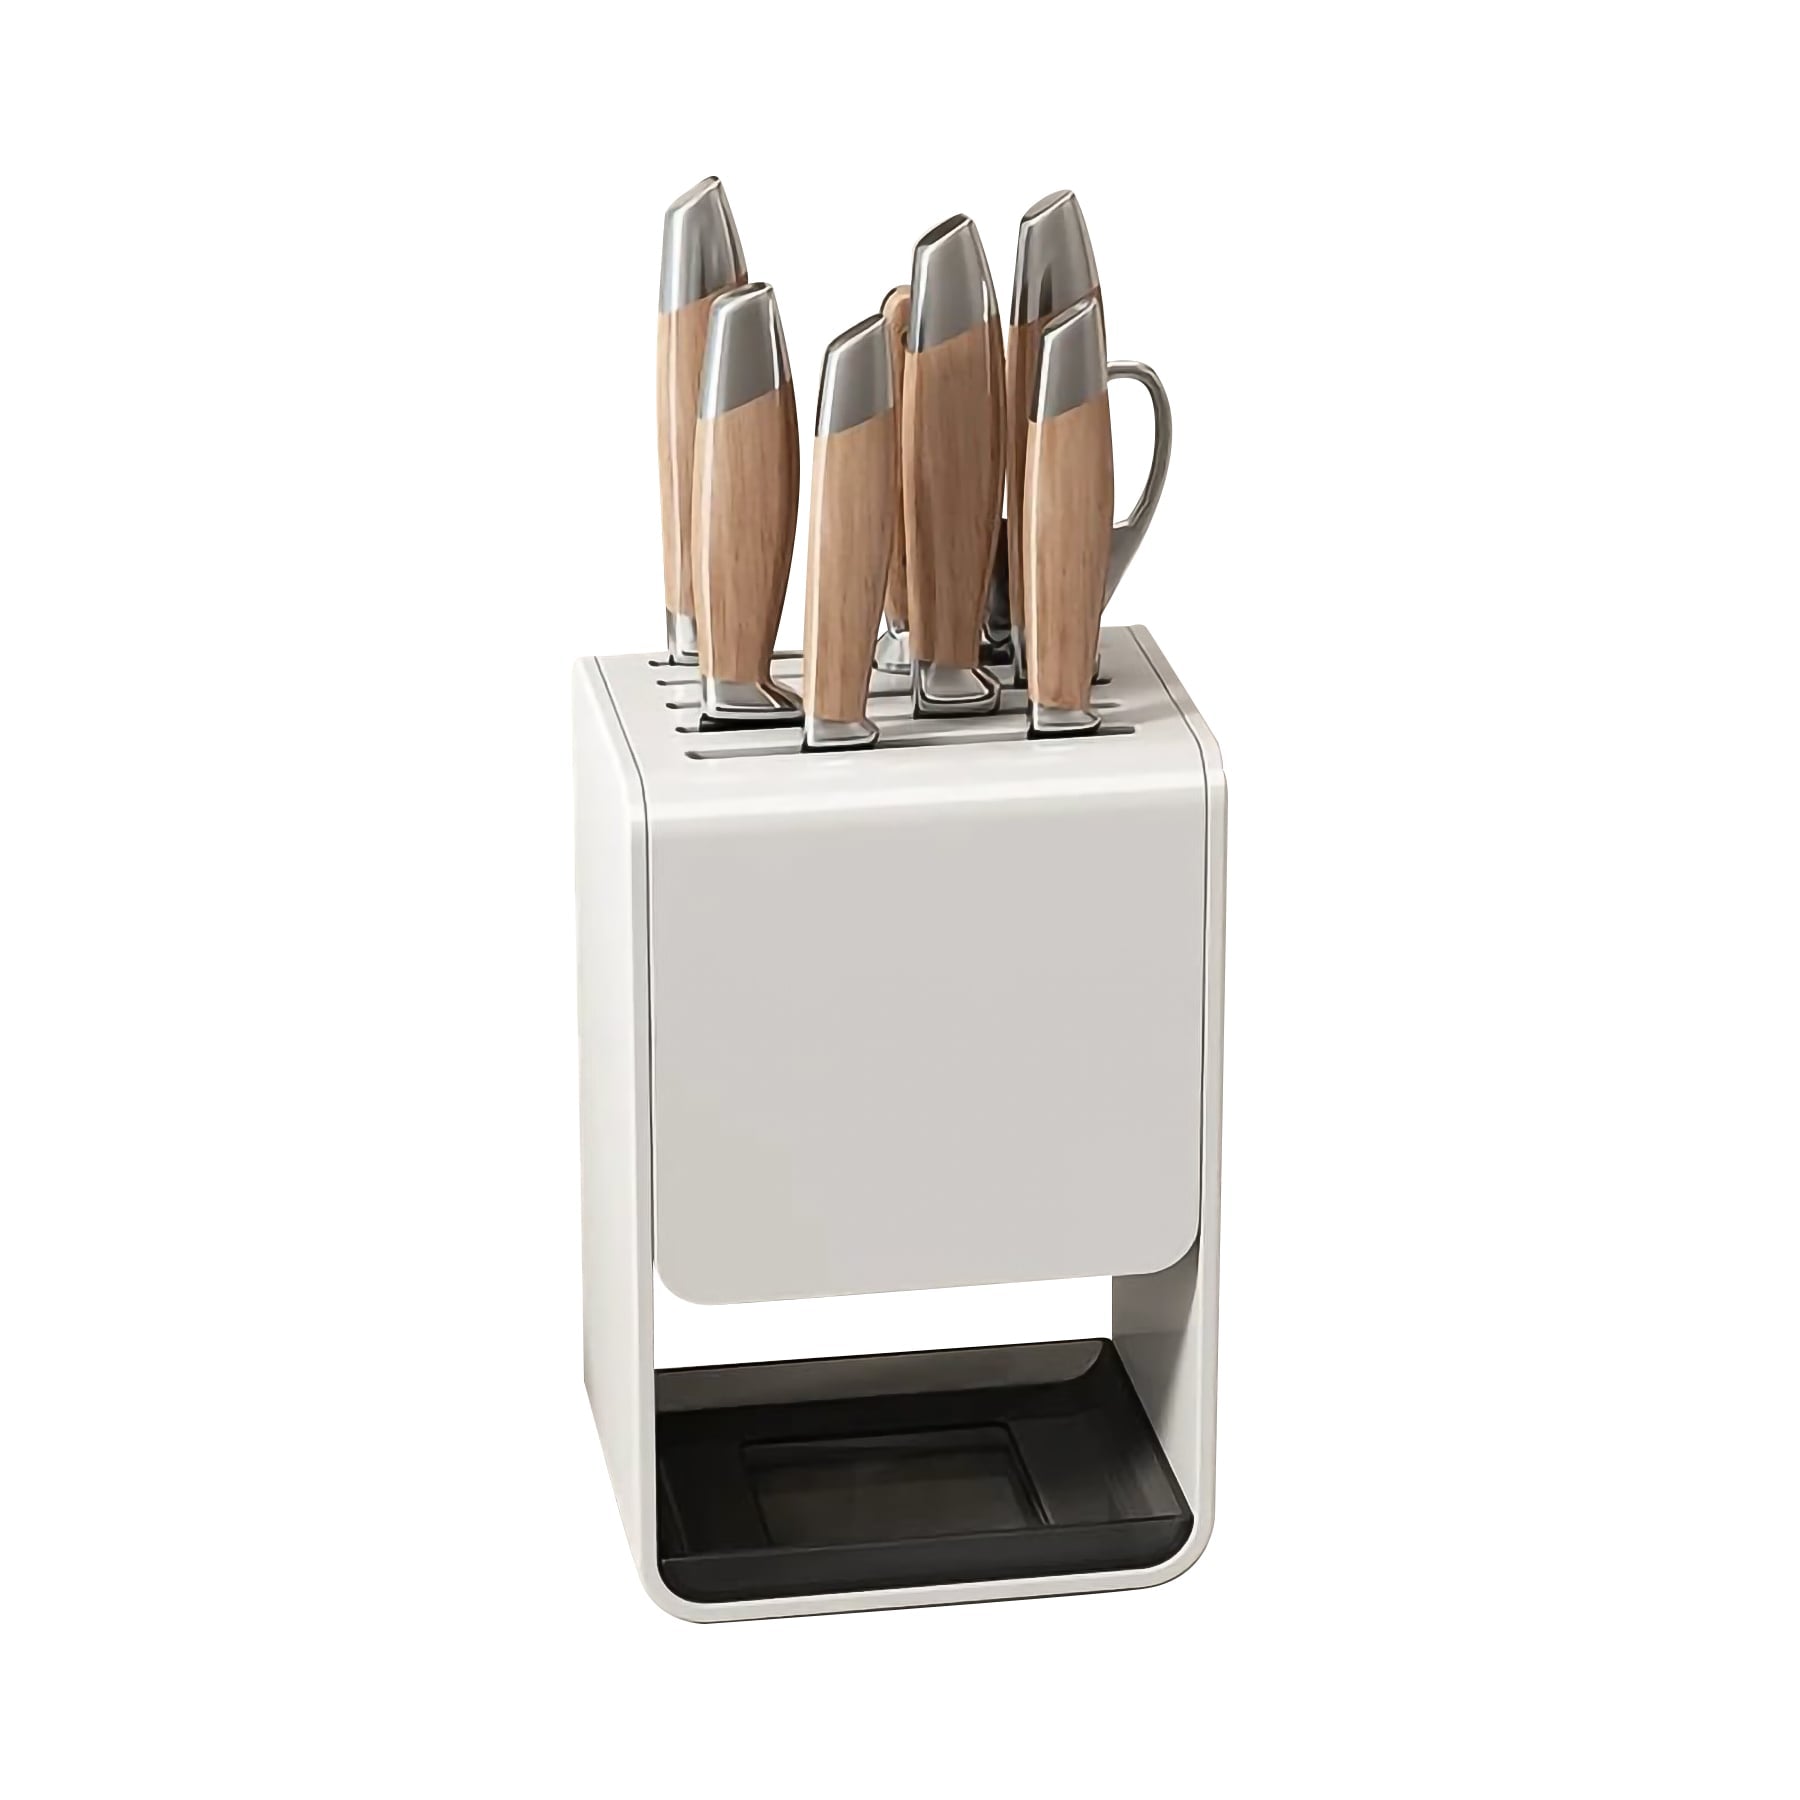 Home: Countertop Kitchen Shelf Multi-Function Utensil & Knife Stand